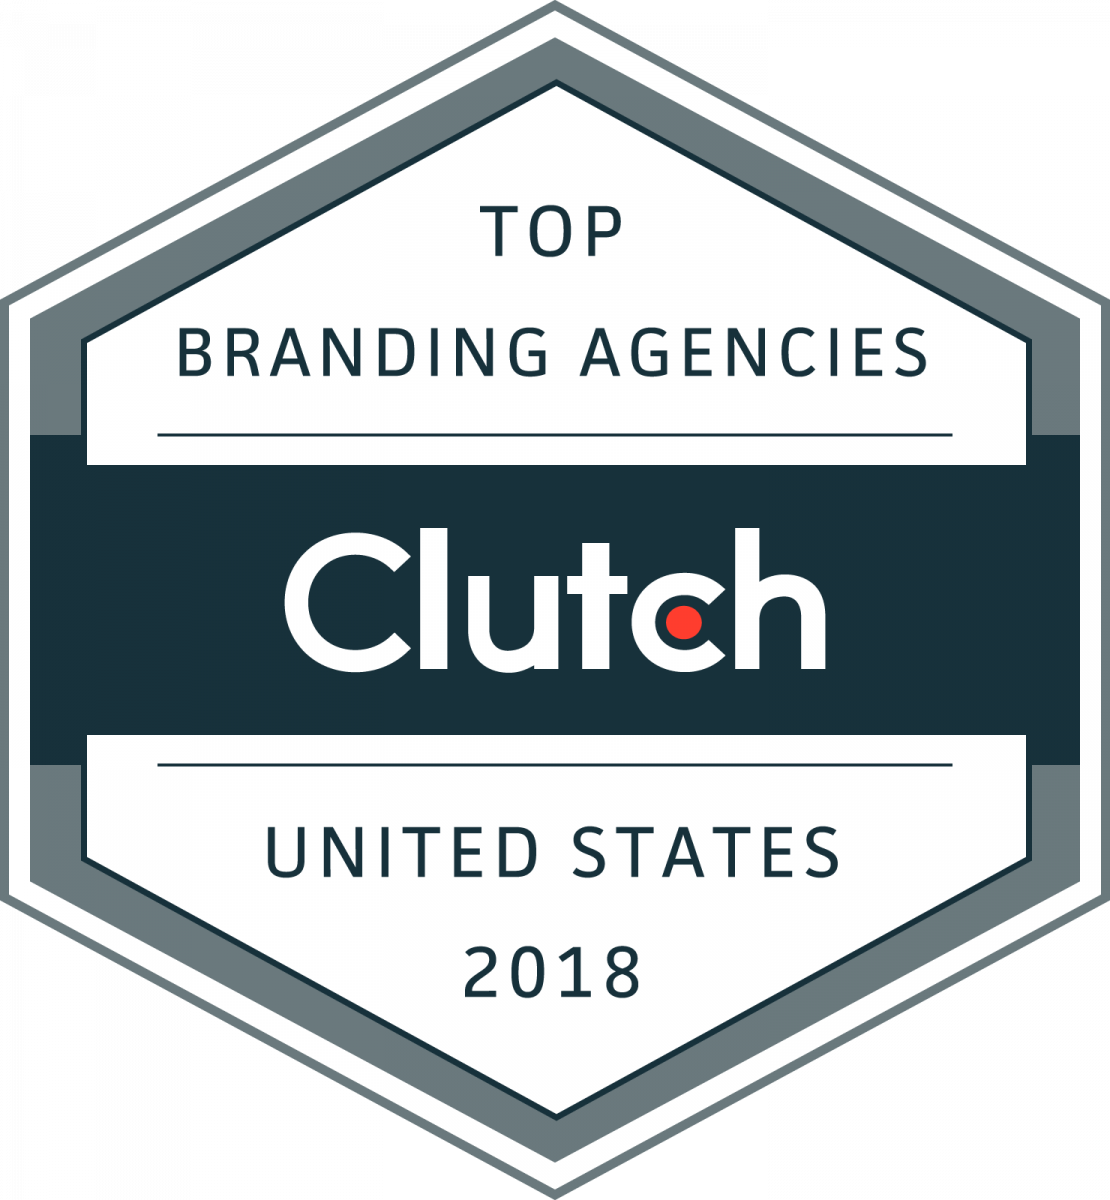 Davis Advertising Named as an Agency Leader in Branding